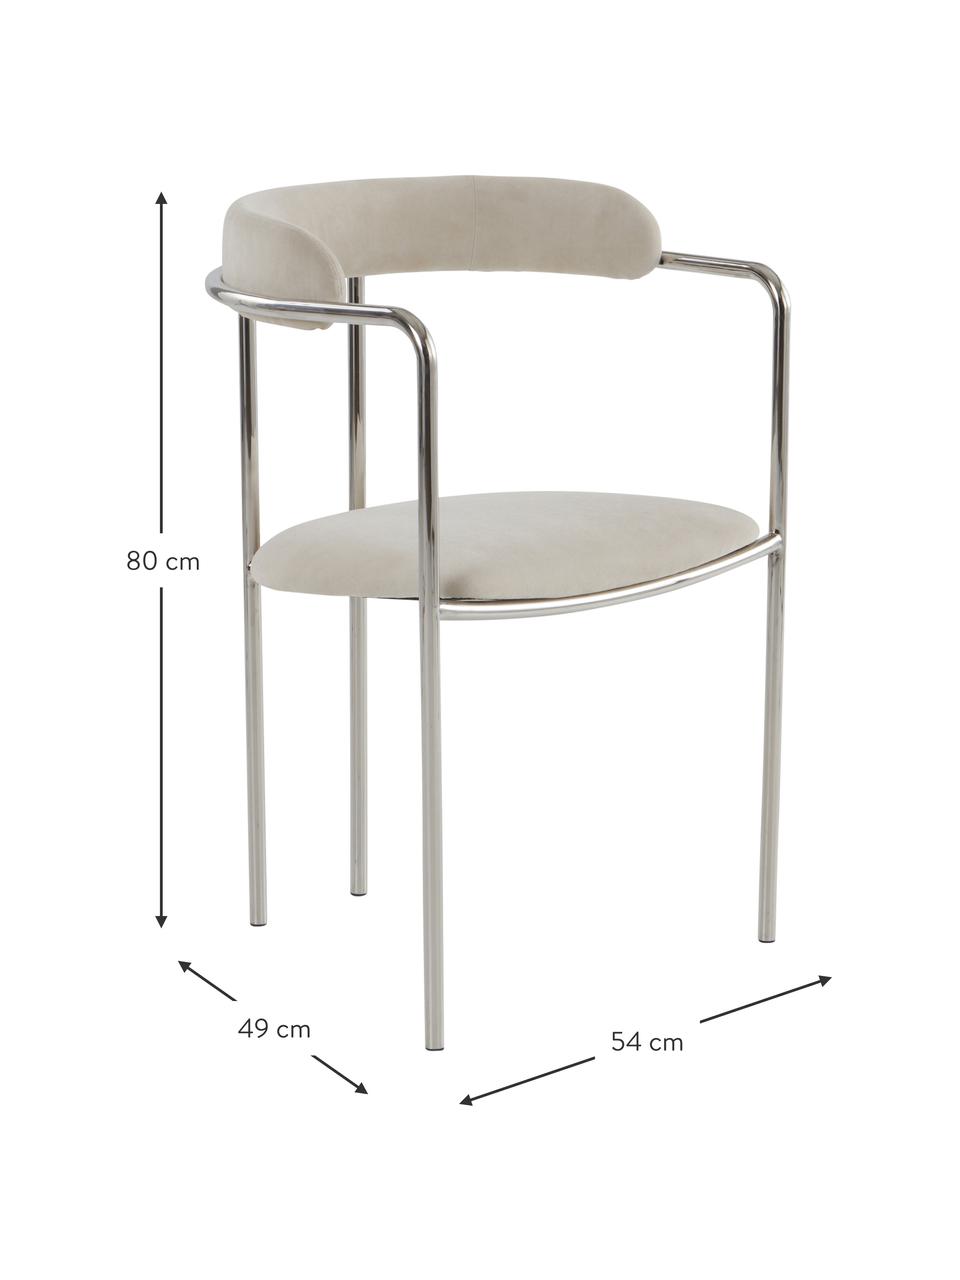 Polstrovaná židle Maryland, Béžová, stříbrná, Š 54 cm, H 49 cm